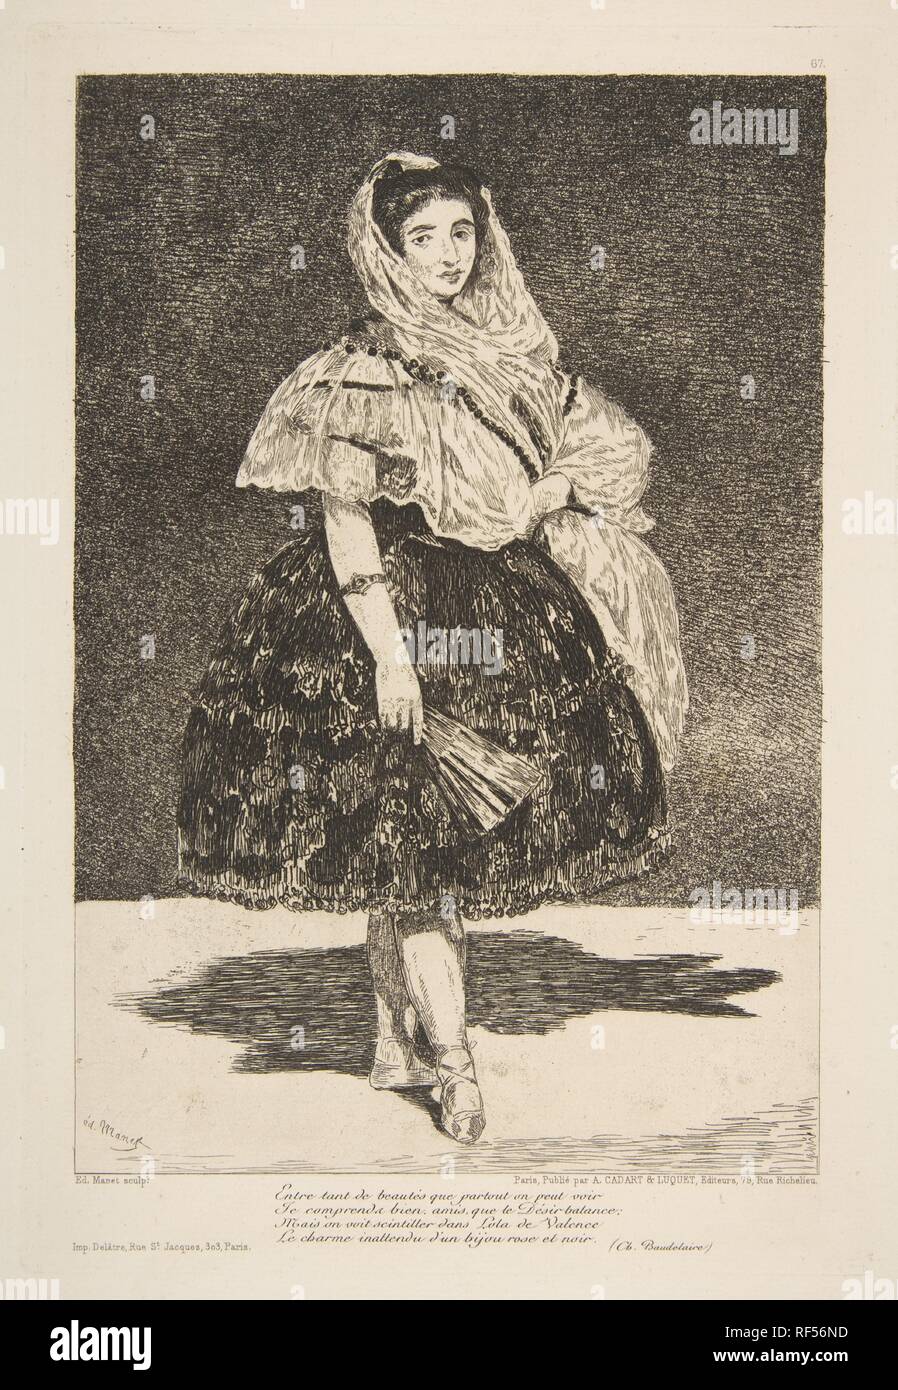 Lola de Valence. Artist: Édouard Manet (French, Paris 1832-1883 Paris). Dimensions: plate: 10 3/8 x 7 1/8 in. (26.4 x 18.1 cm)  sheet: 15 9/16 x 11 5/8in. (39.5 x 29.5cm). Publisher: Cadart & Luquet. Date: 1863. Museum: Metropolitan Museum of Art, New York, USA. Author: EDOUARD MANET. BAUDELAIRE, CHARLES. Stock Photo